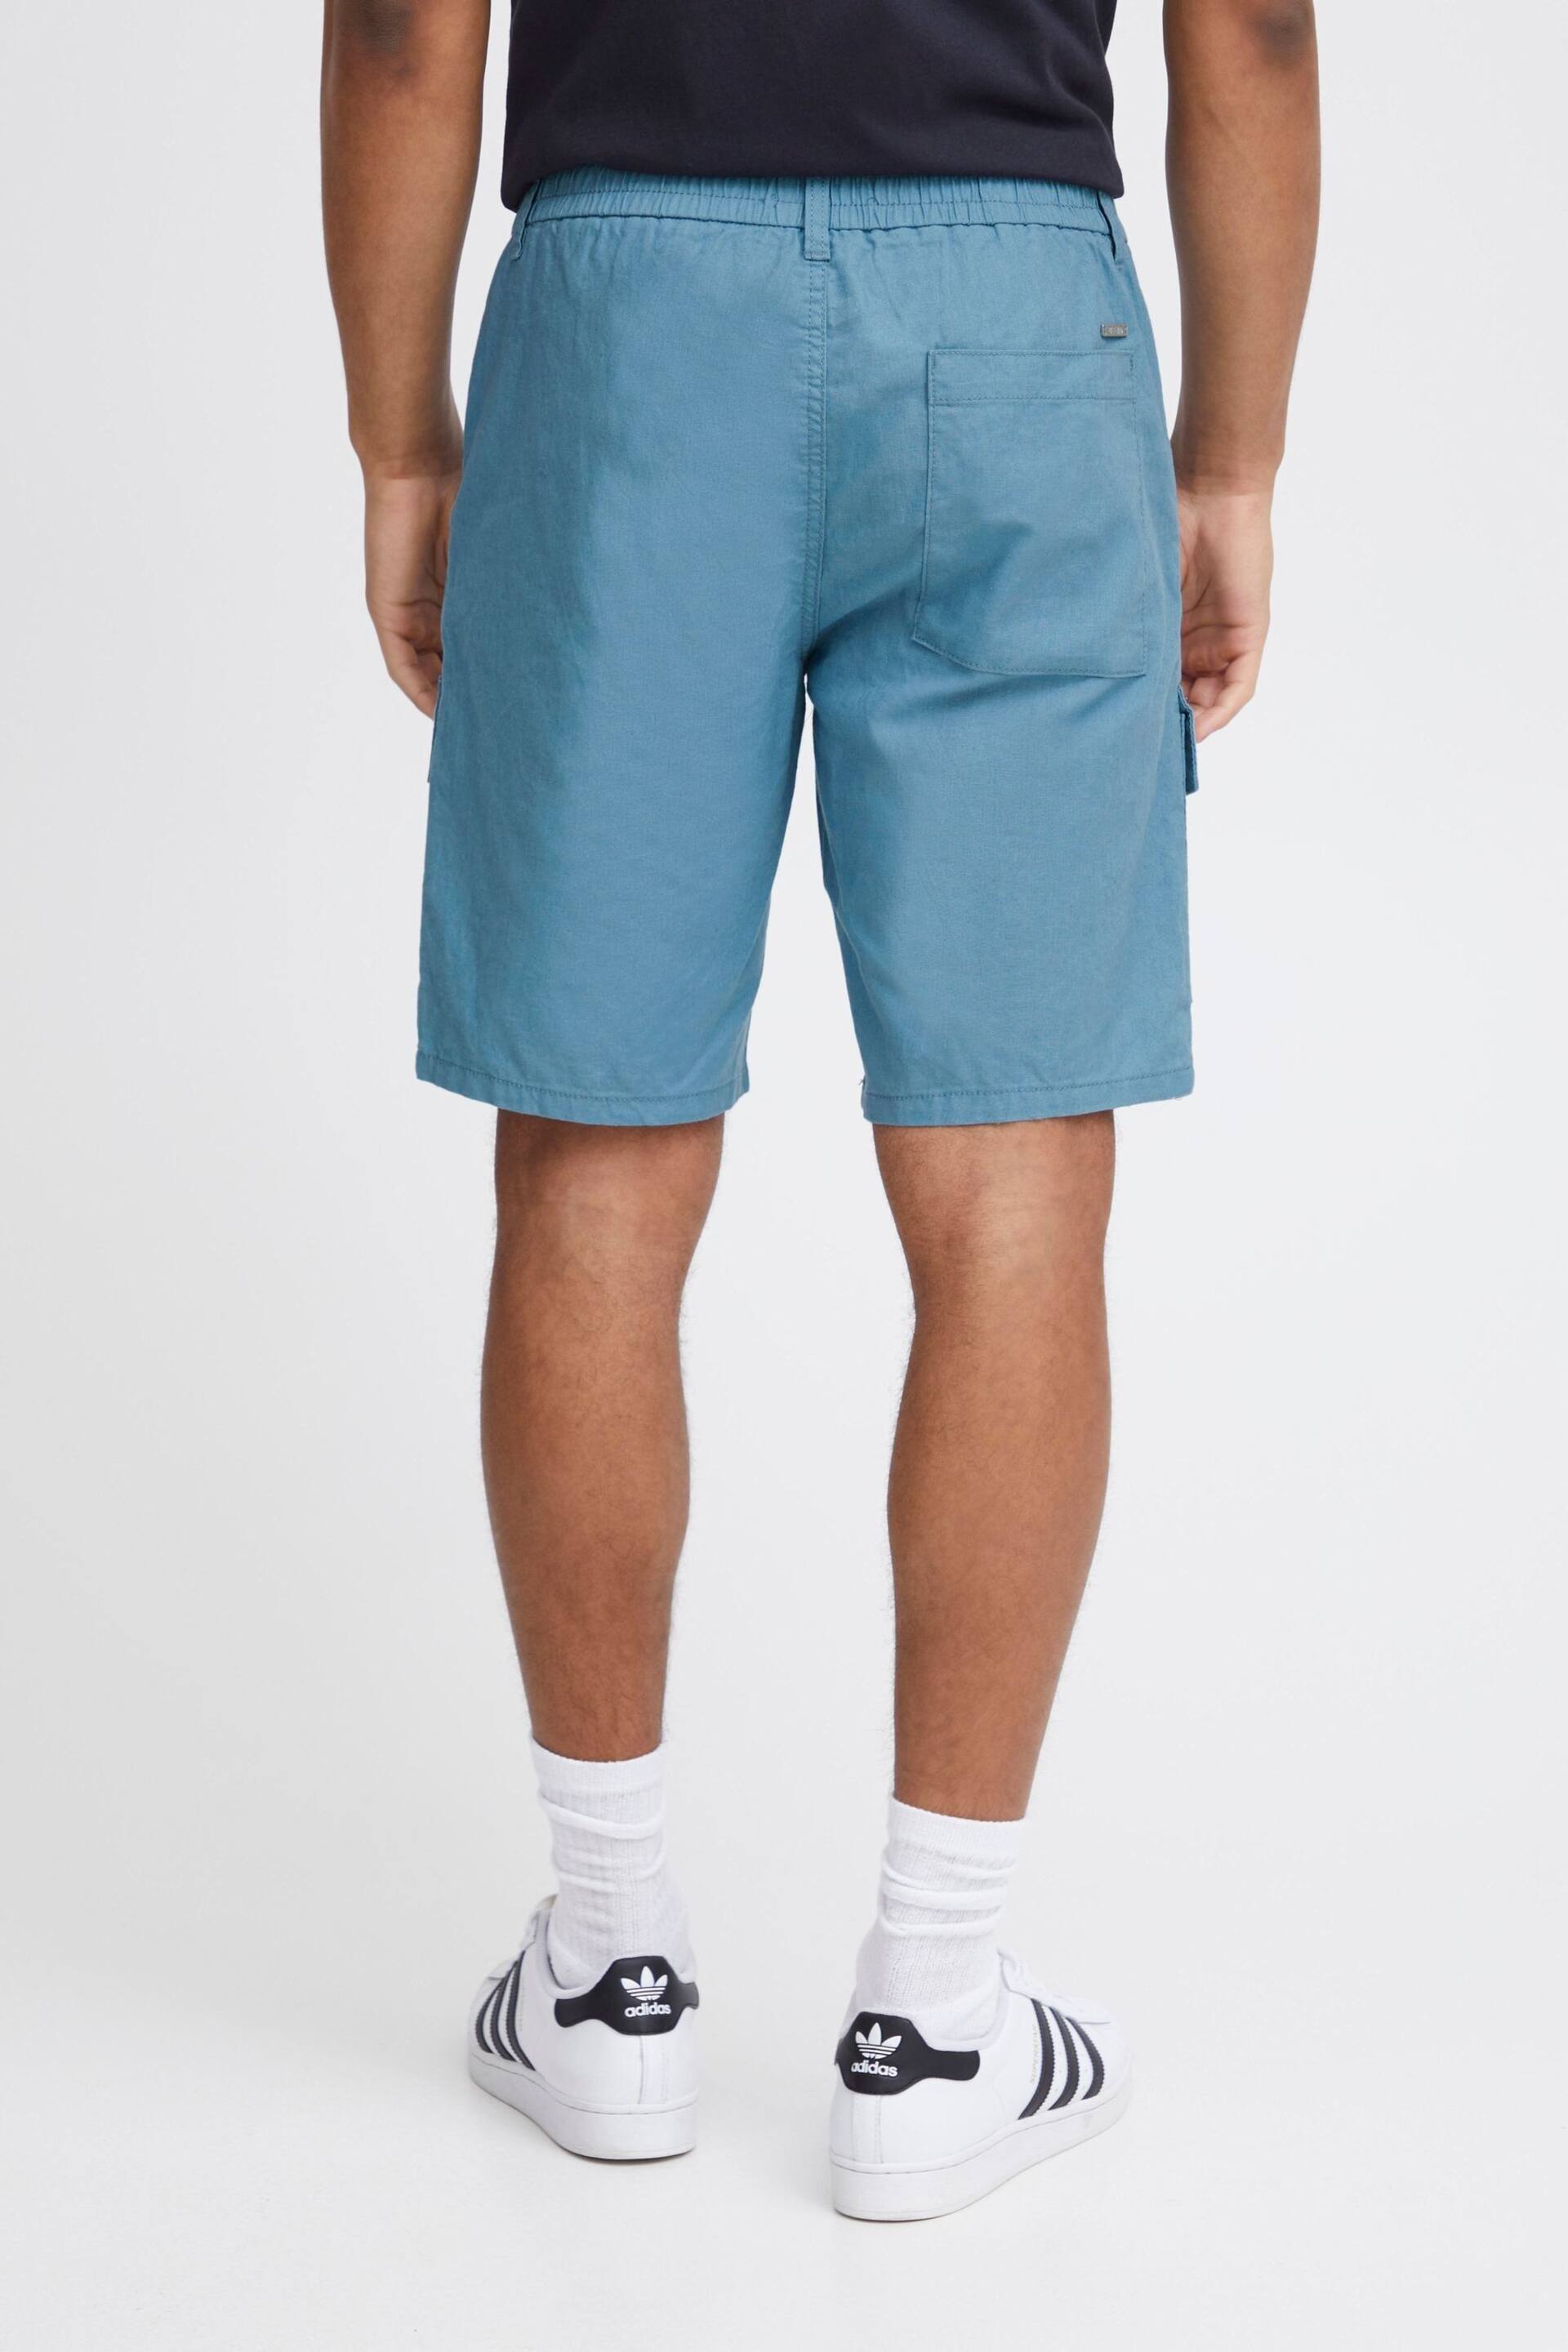 Blend Blue Linen Cargo Shorts - Image 2 of 5